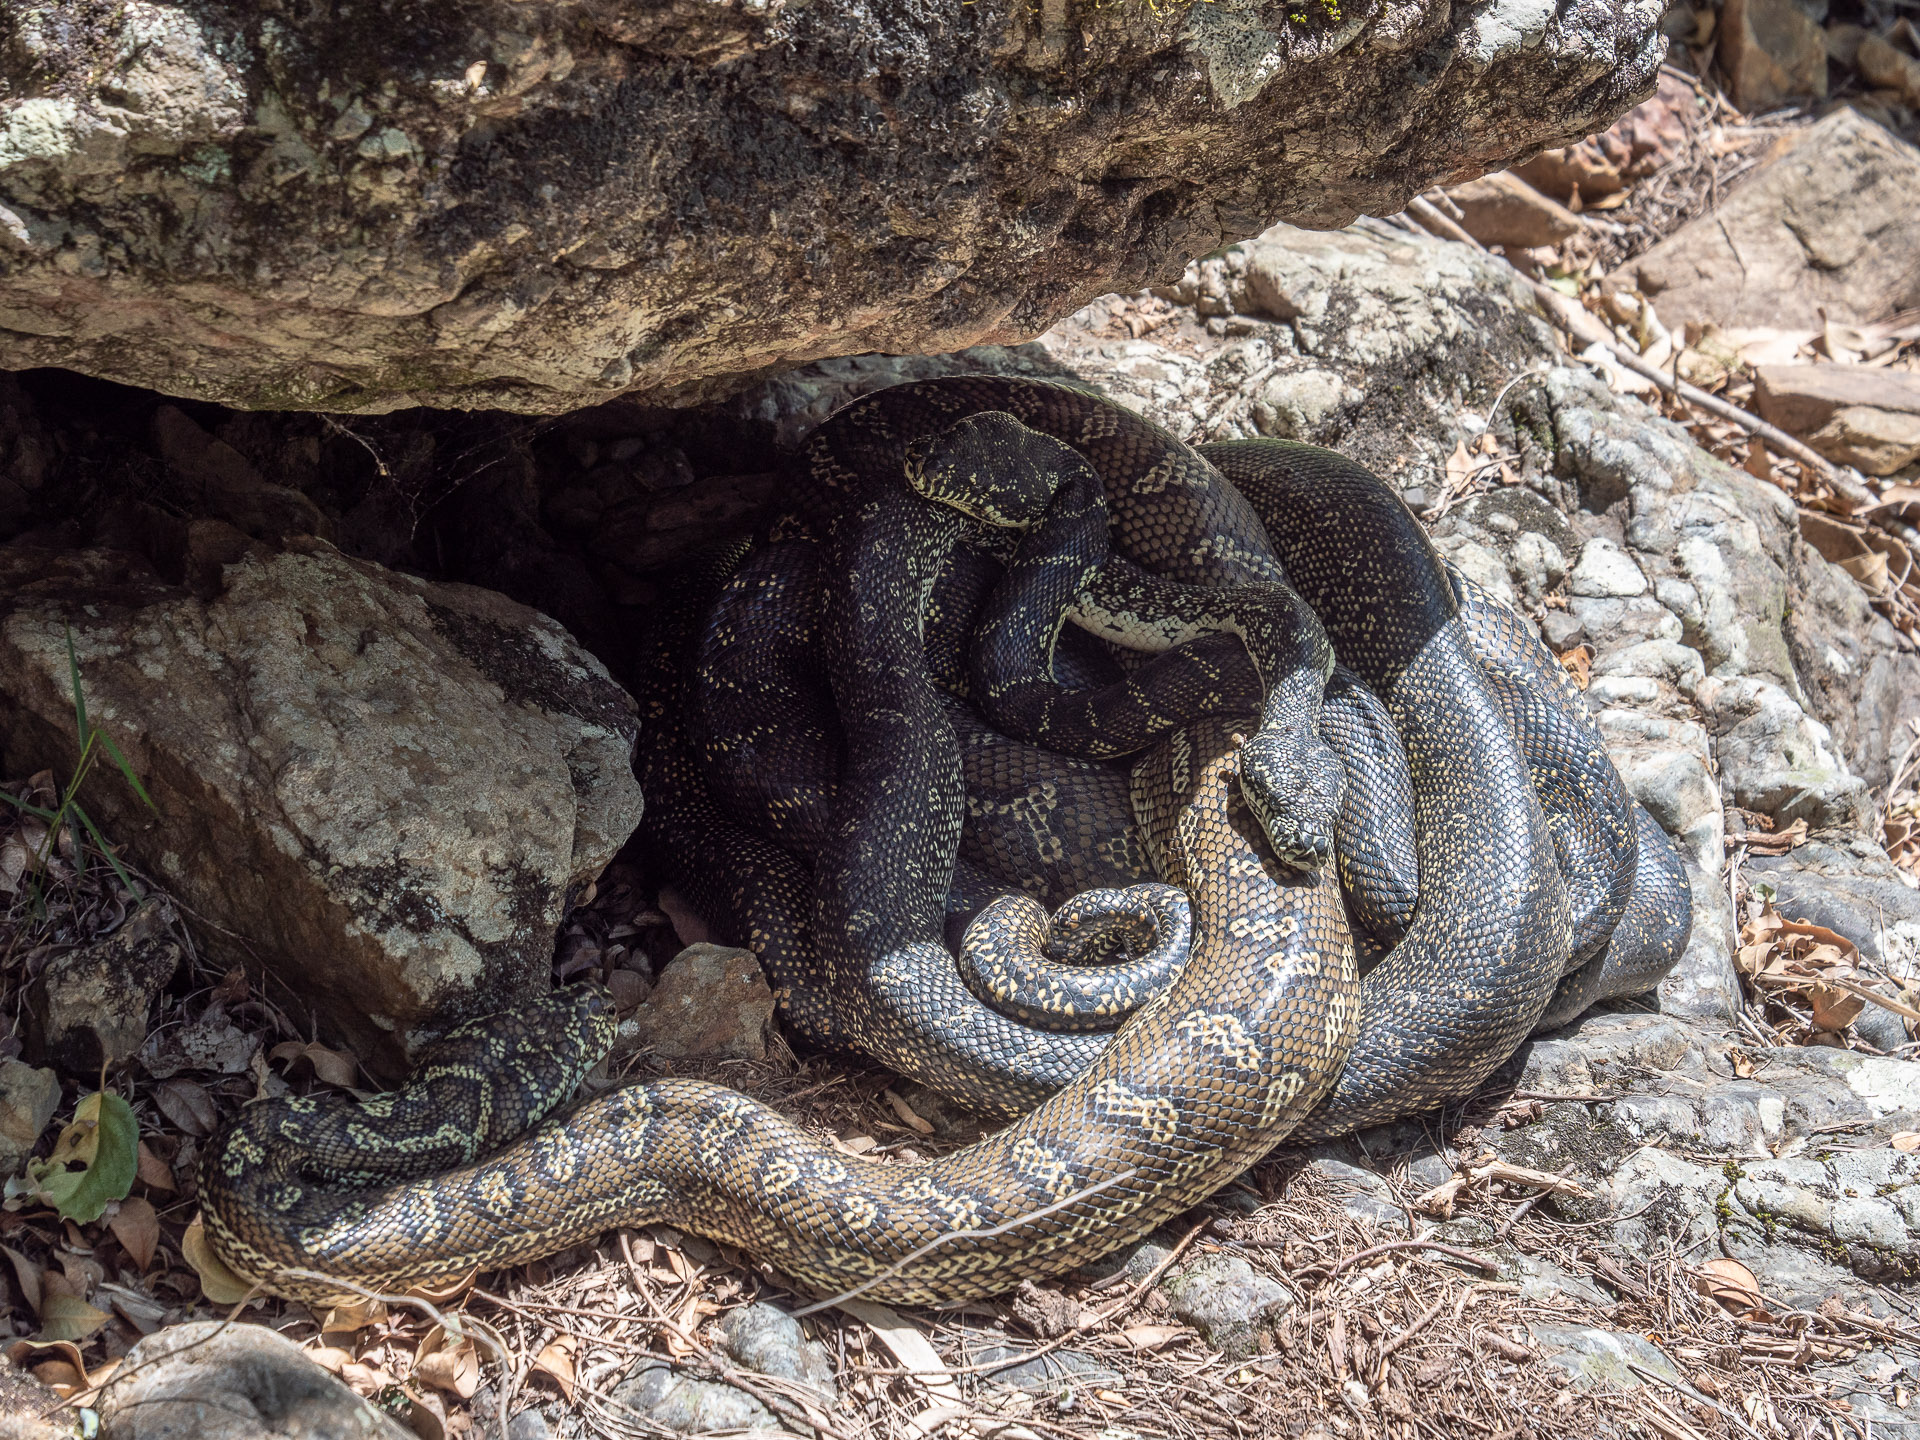 A python threesome (image G. Luscombe)